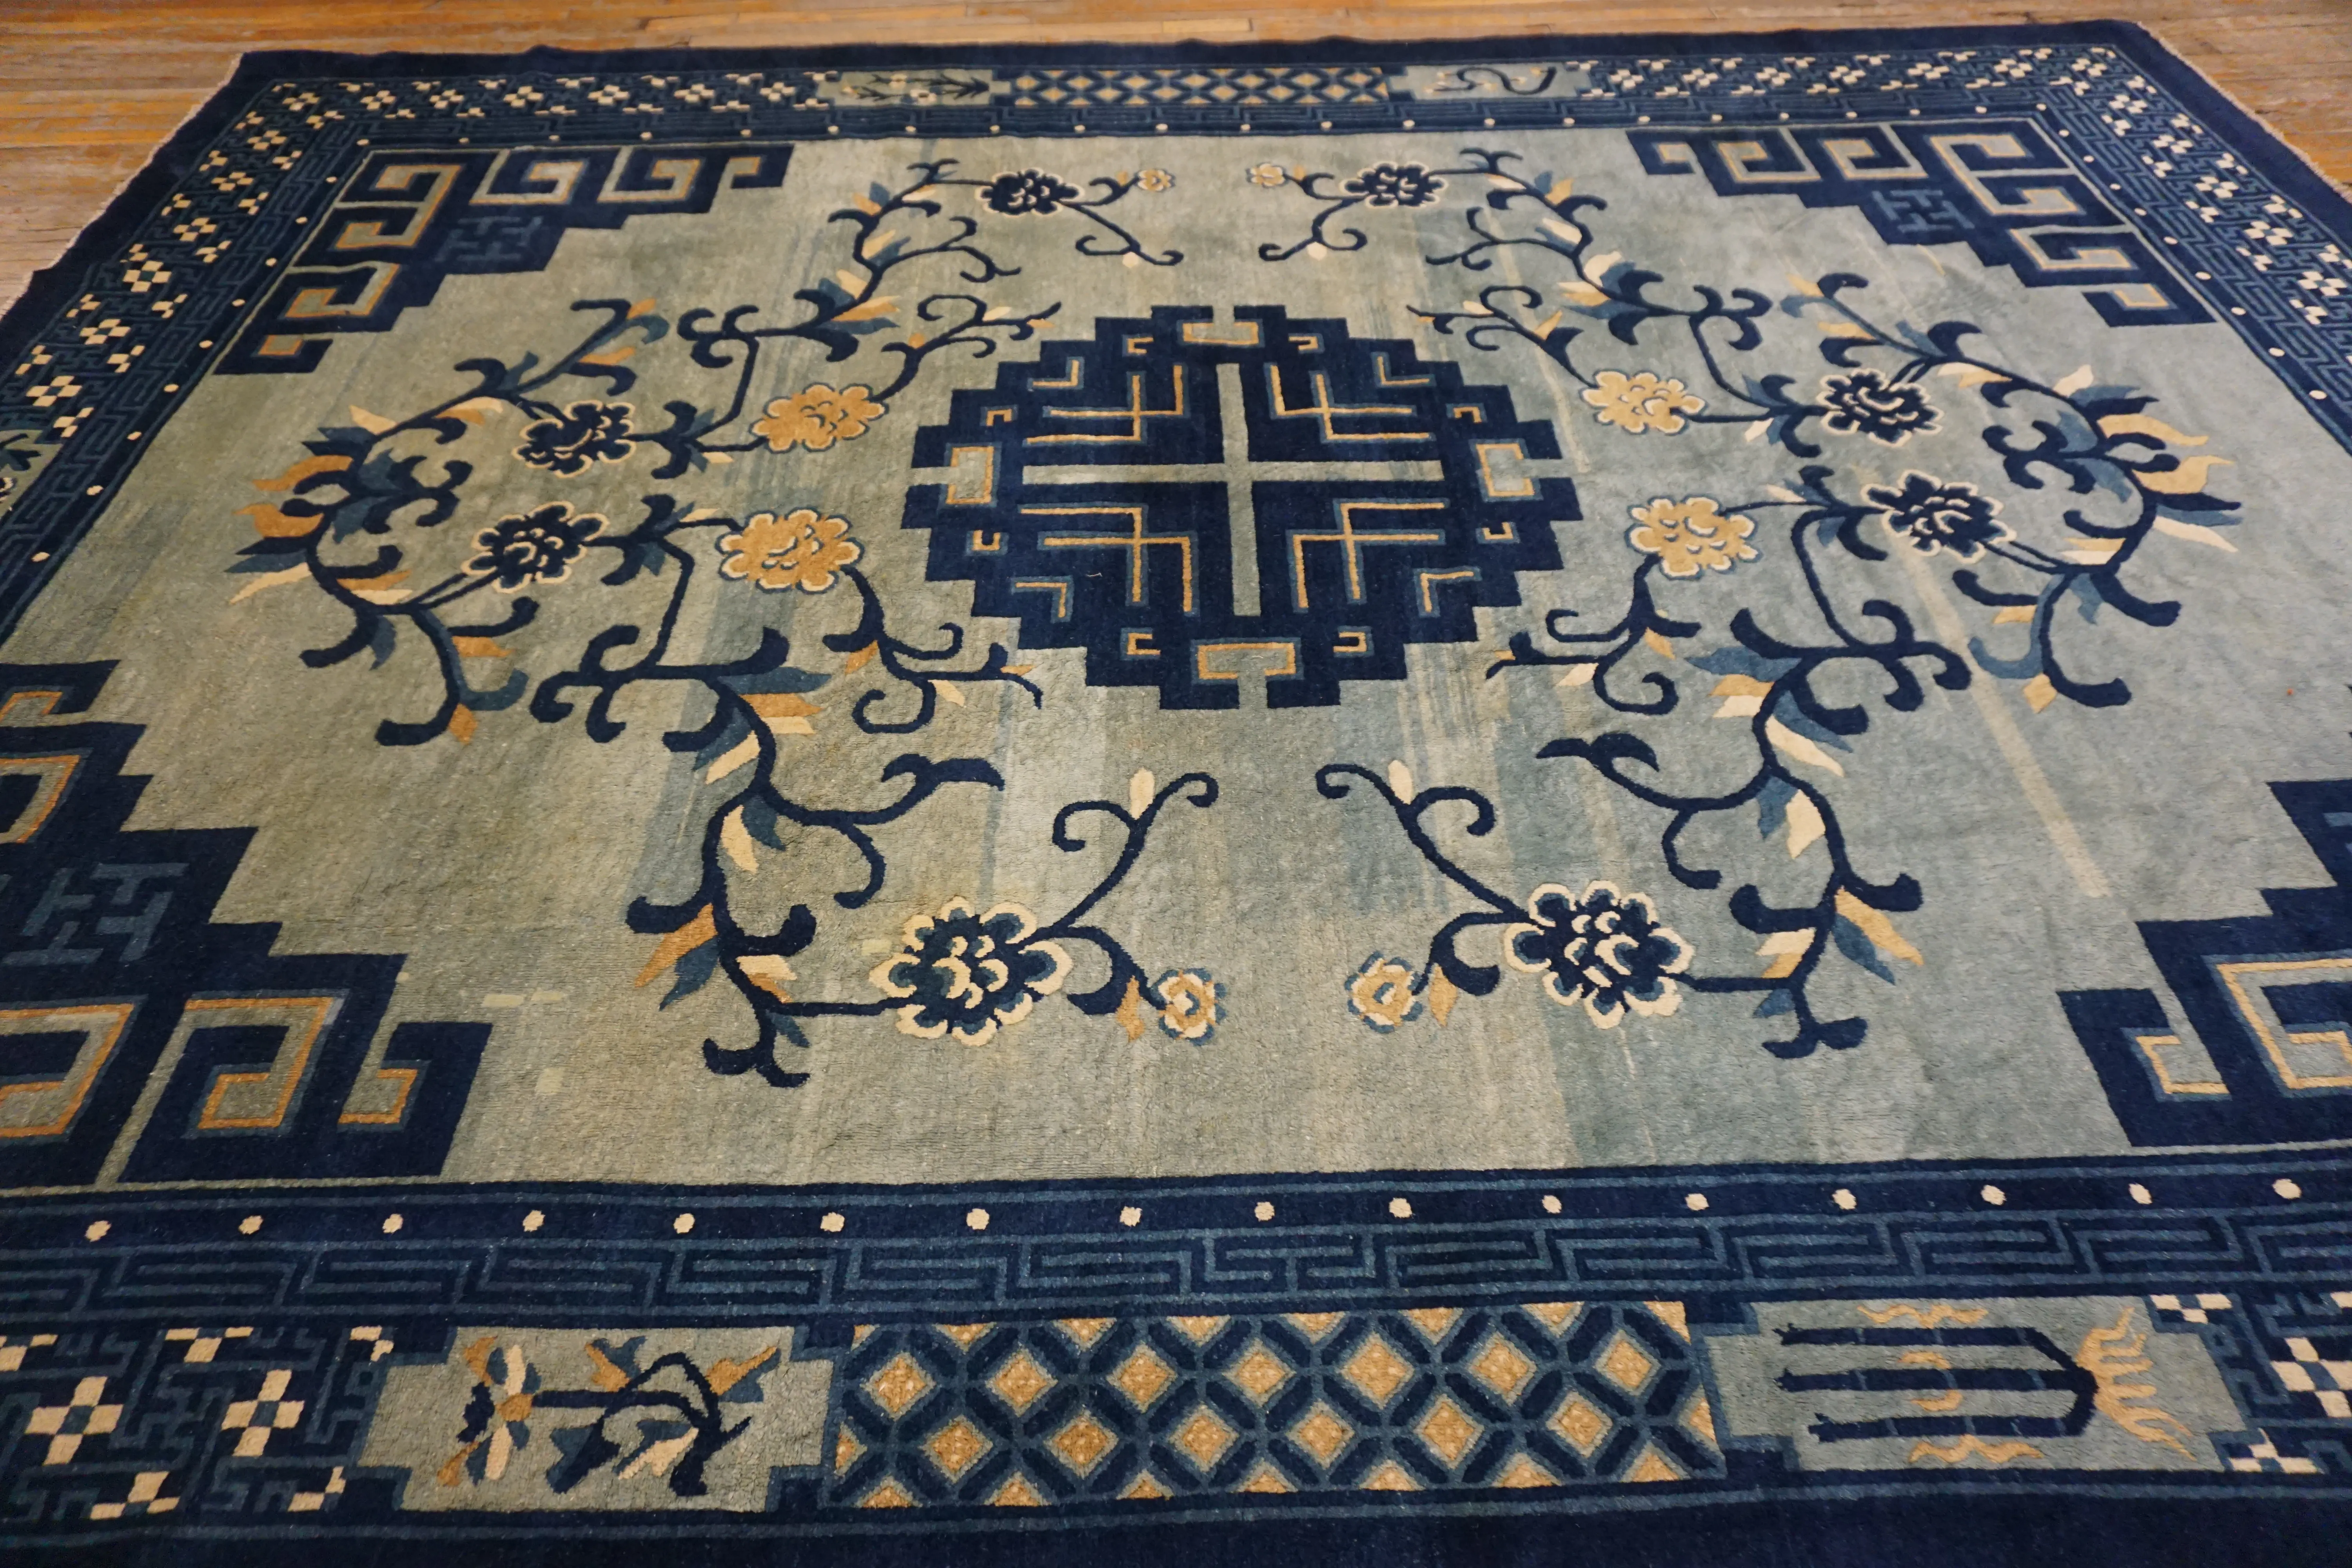 19th Century Chinese Peking Carpet - blue